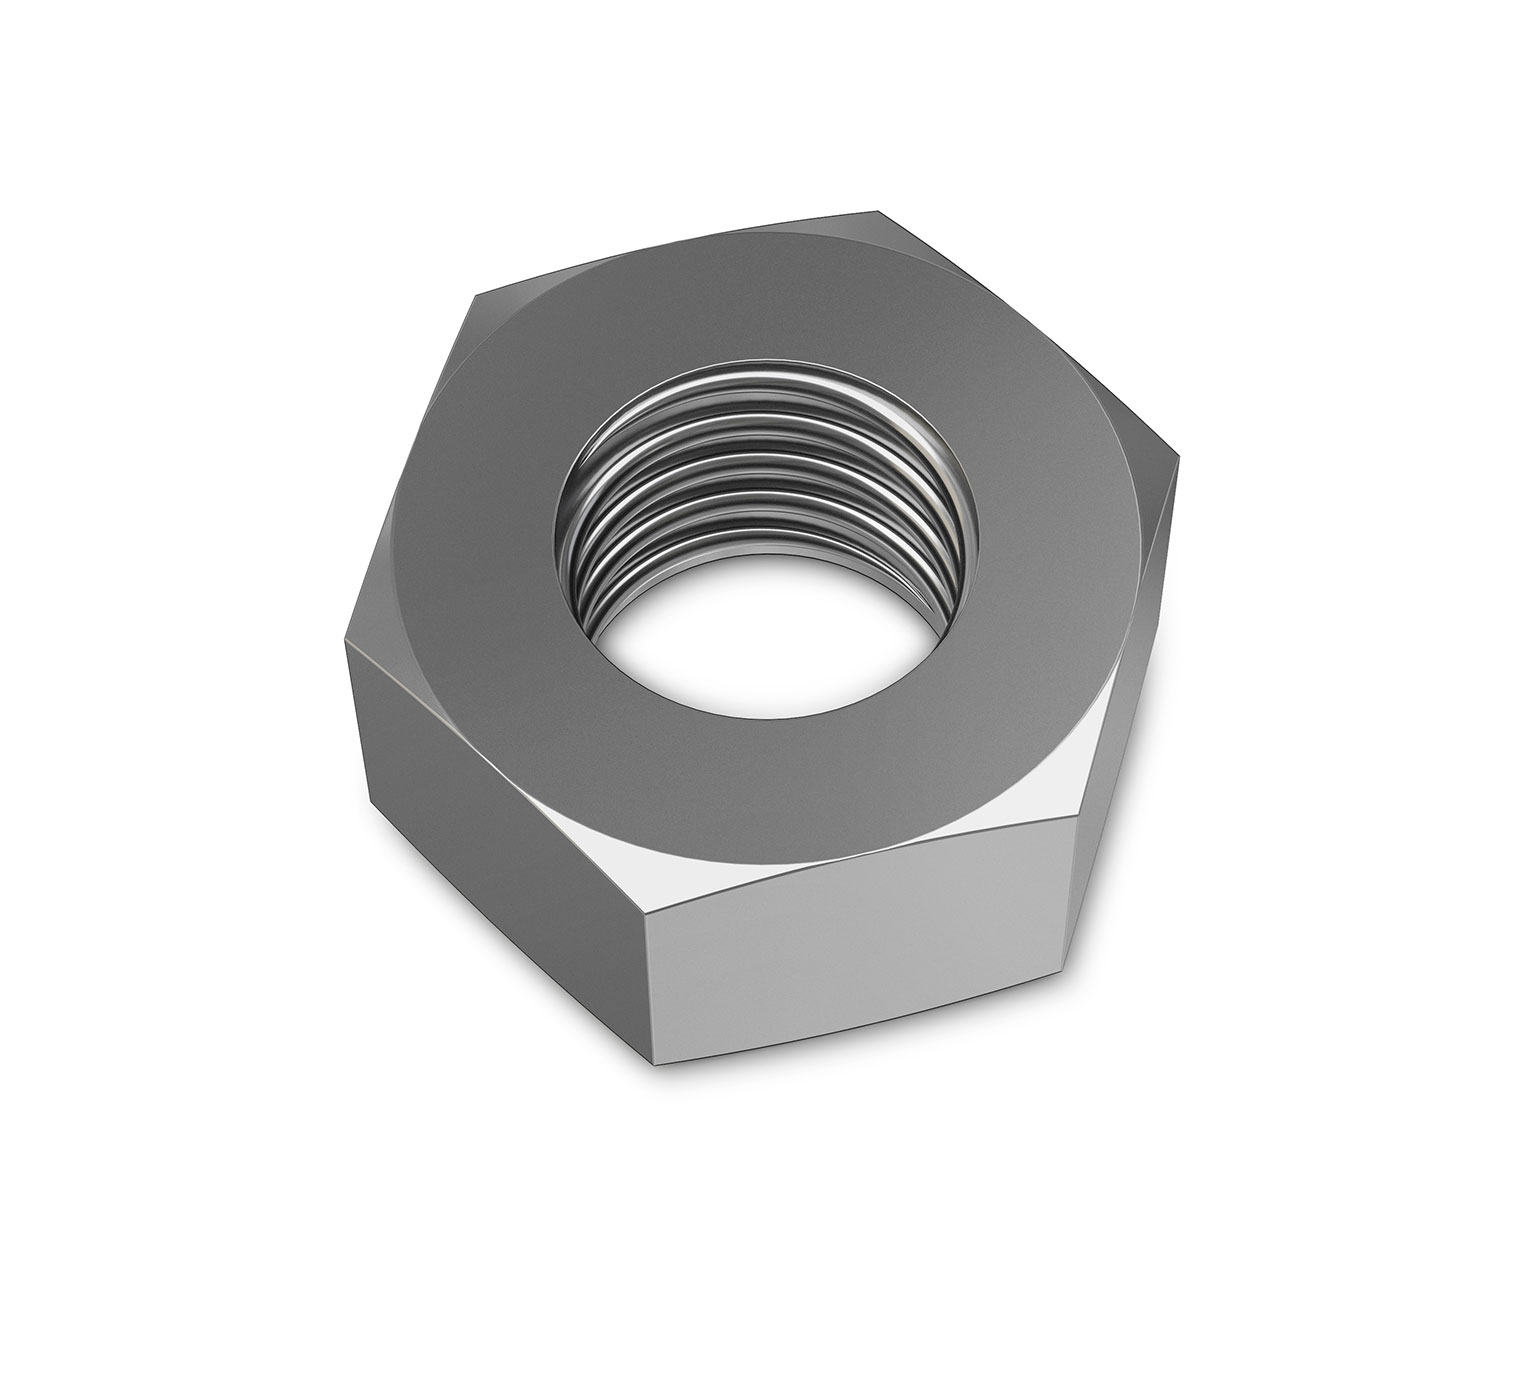 1037470 Écrou hexagonal en acier inoxydable - 0,86 x 0,425 po / 2,18 x 1,08 cm alt 1